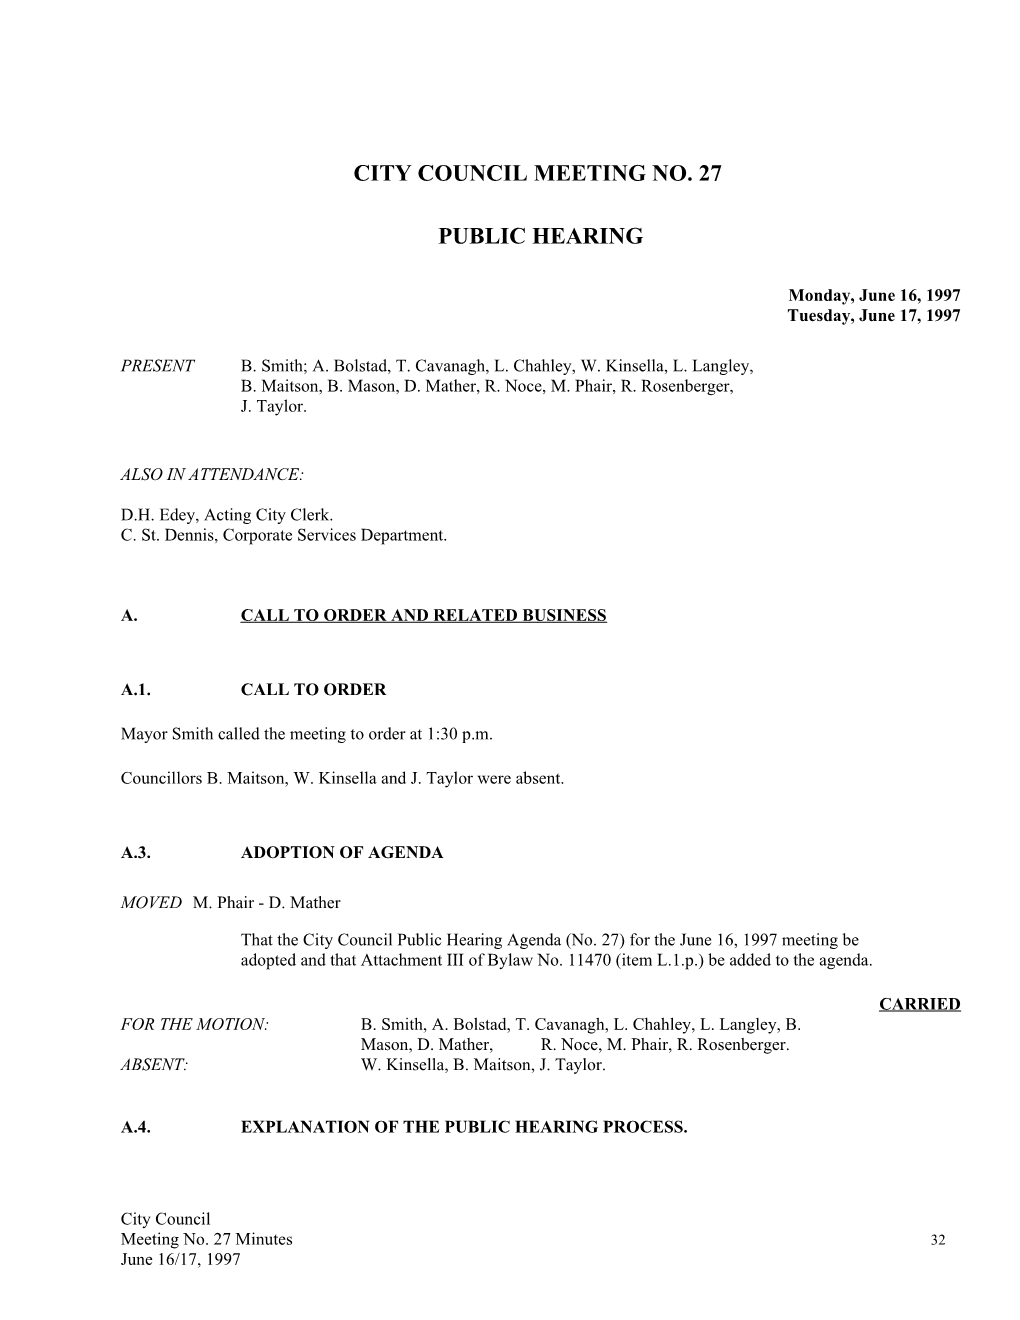 City Council Meeting No. 27